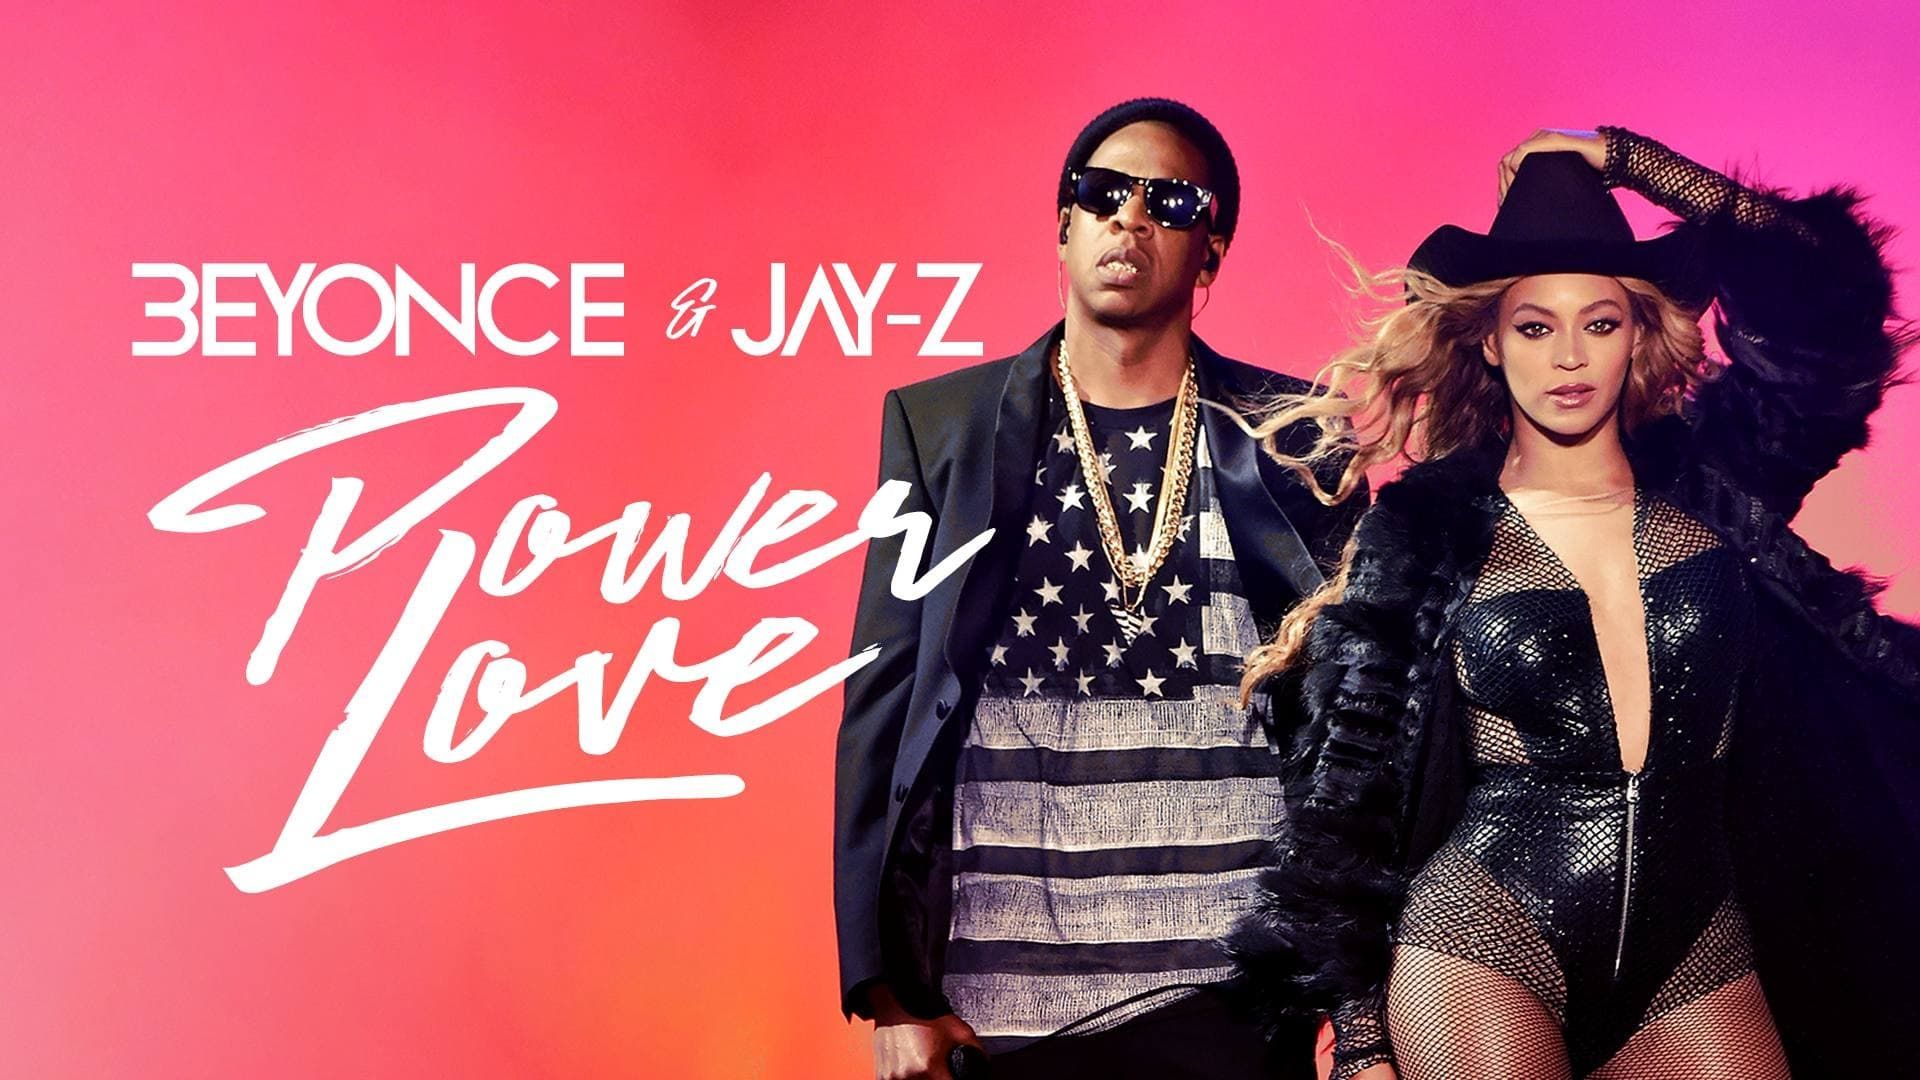 Beyonce & Jay-Z: Power Love background